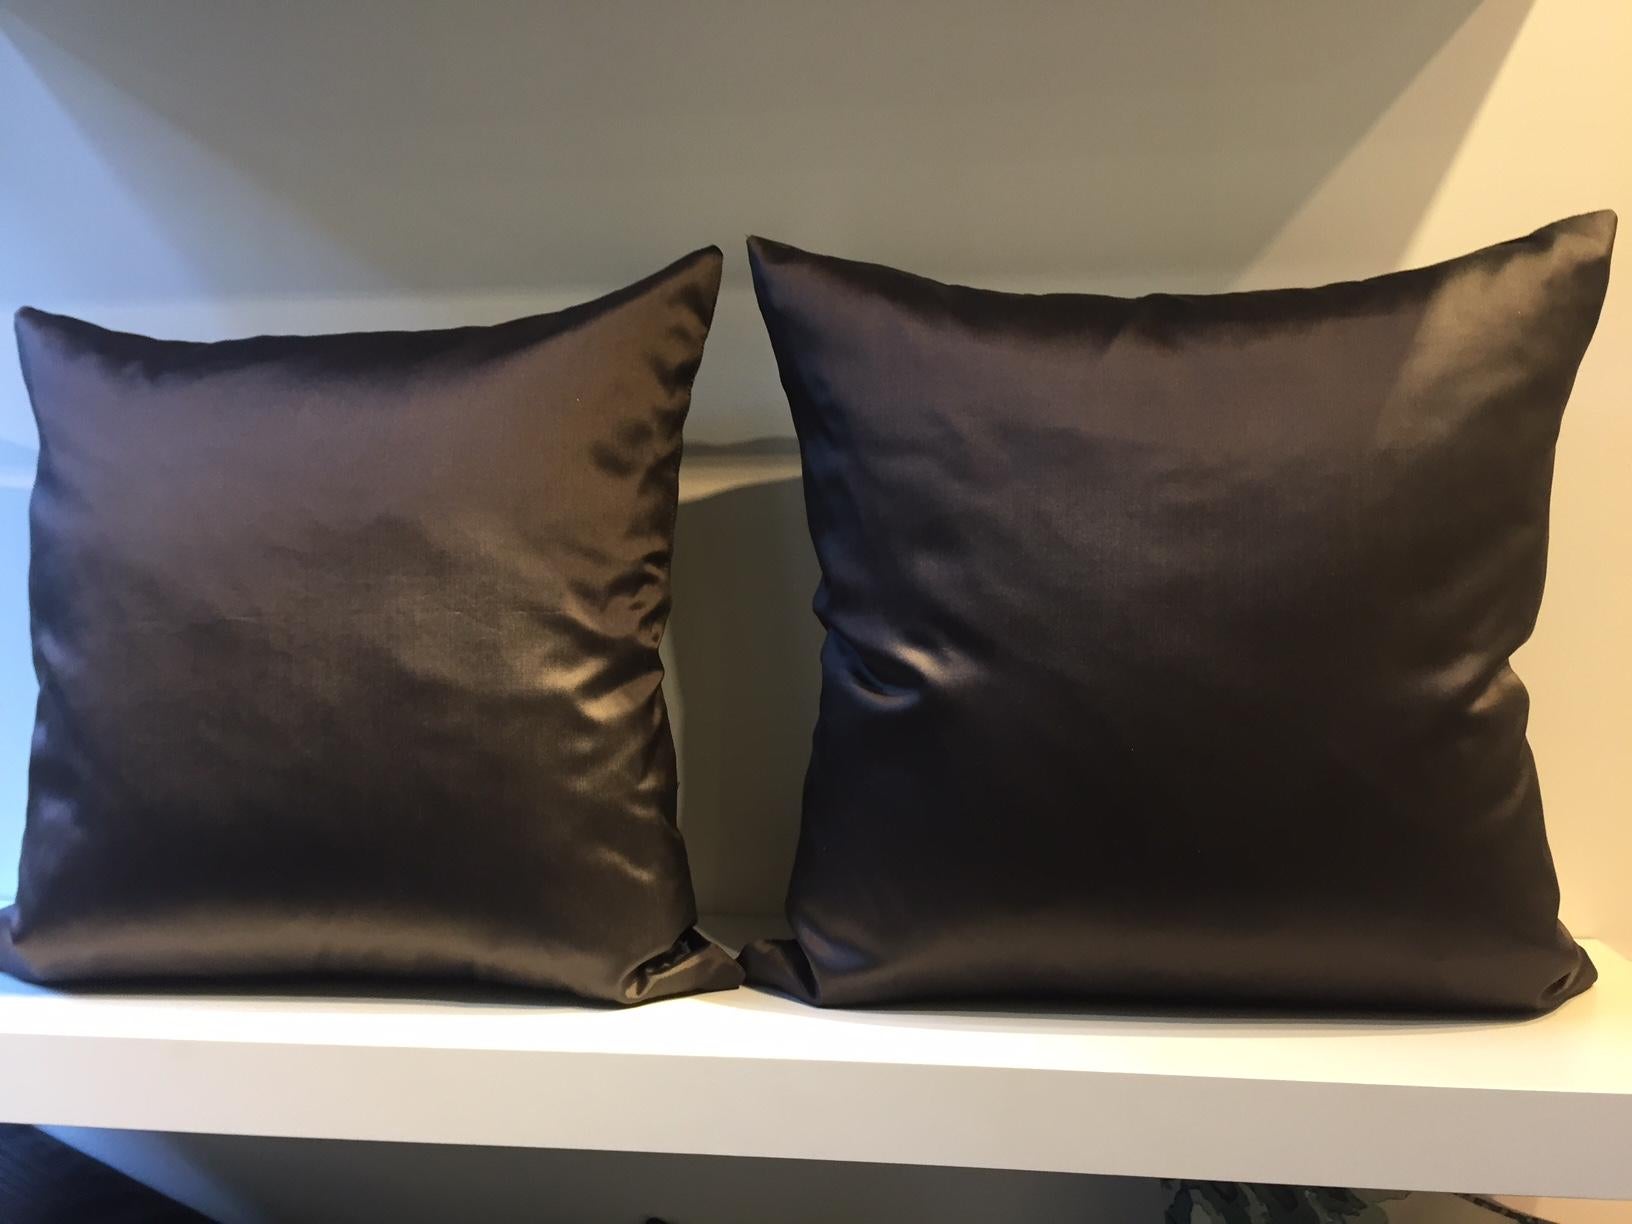 dark brown pillow